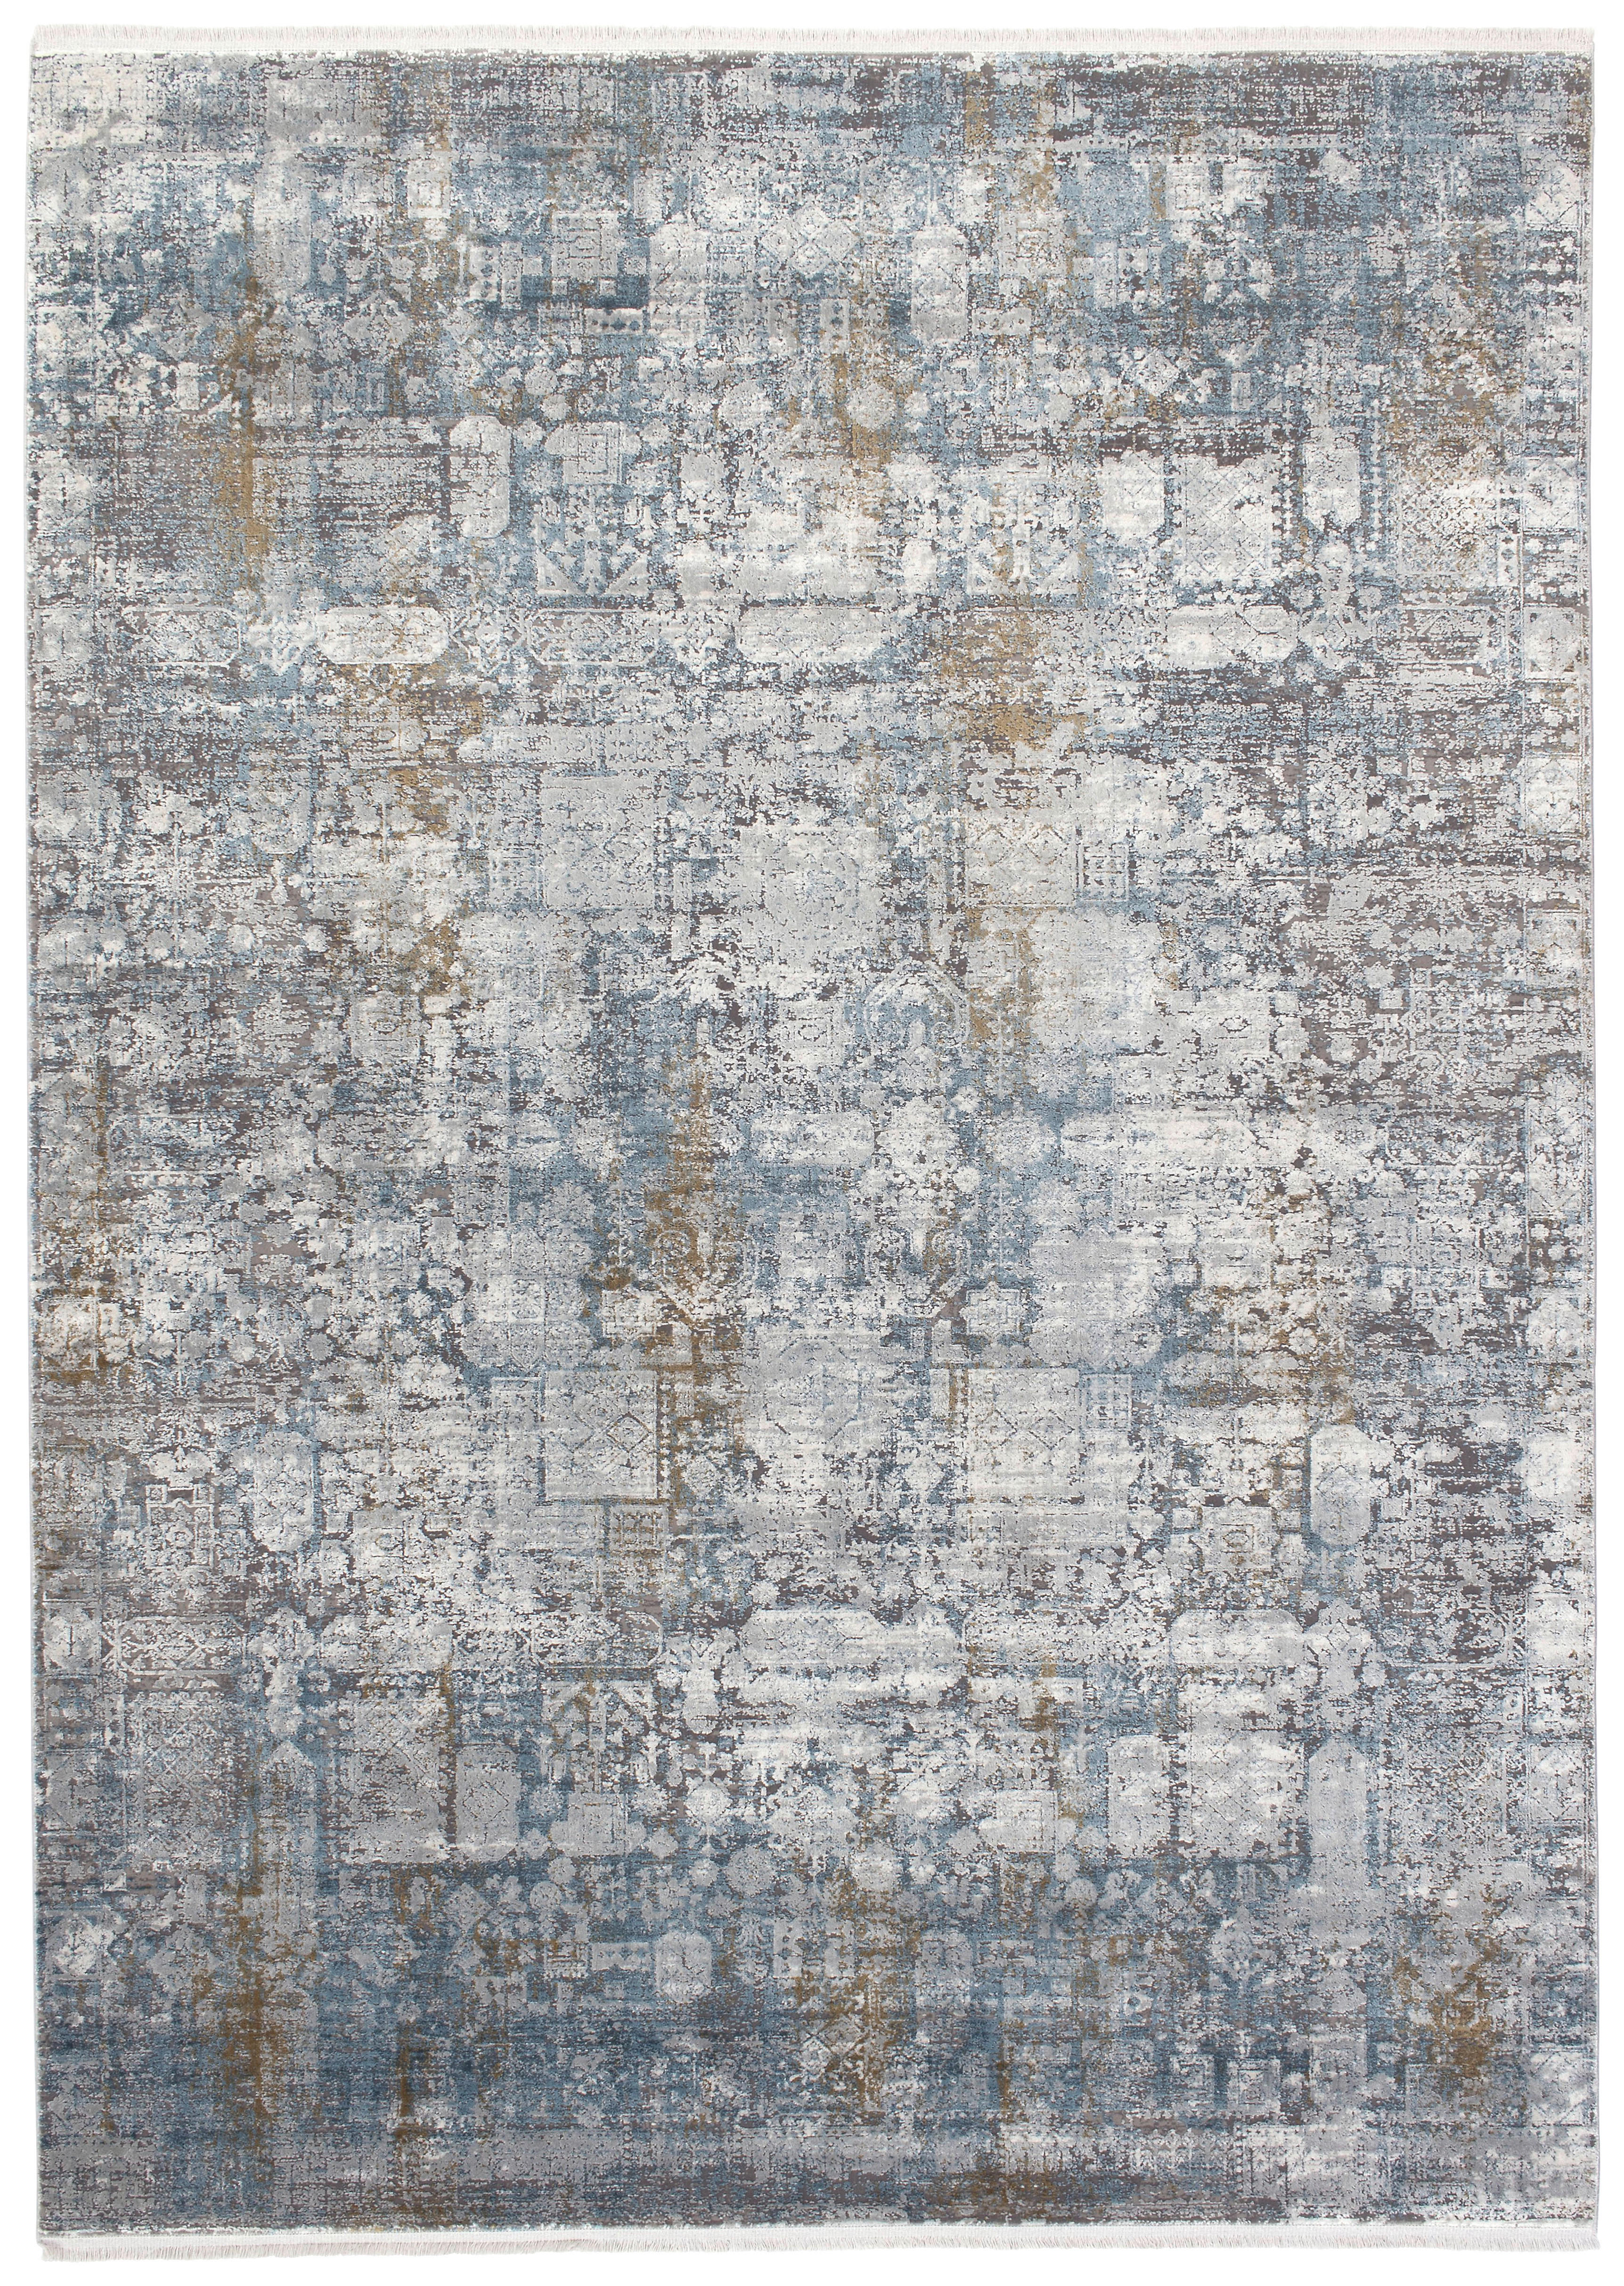 WEBTEPPICH  240/340 cm  Blau, Grau   - Blau/Grau, Design, Textil (240/340cm) - Musterring